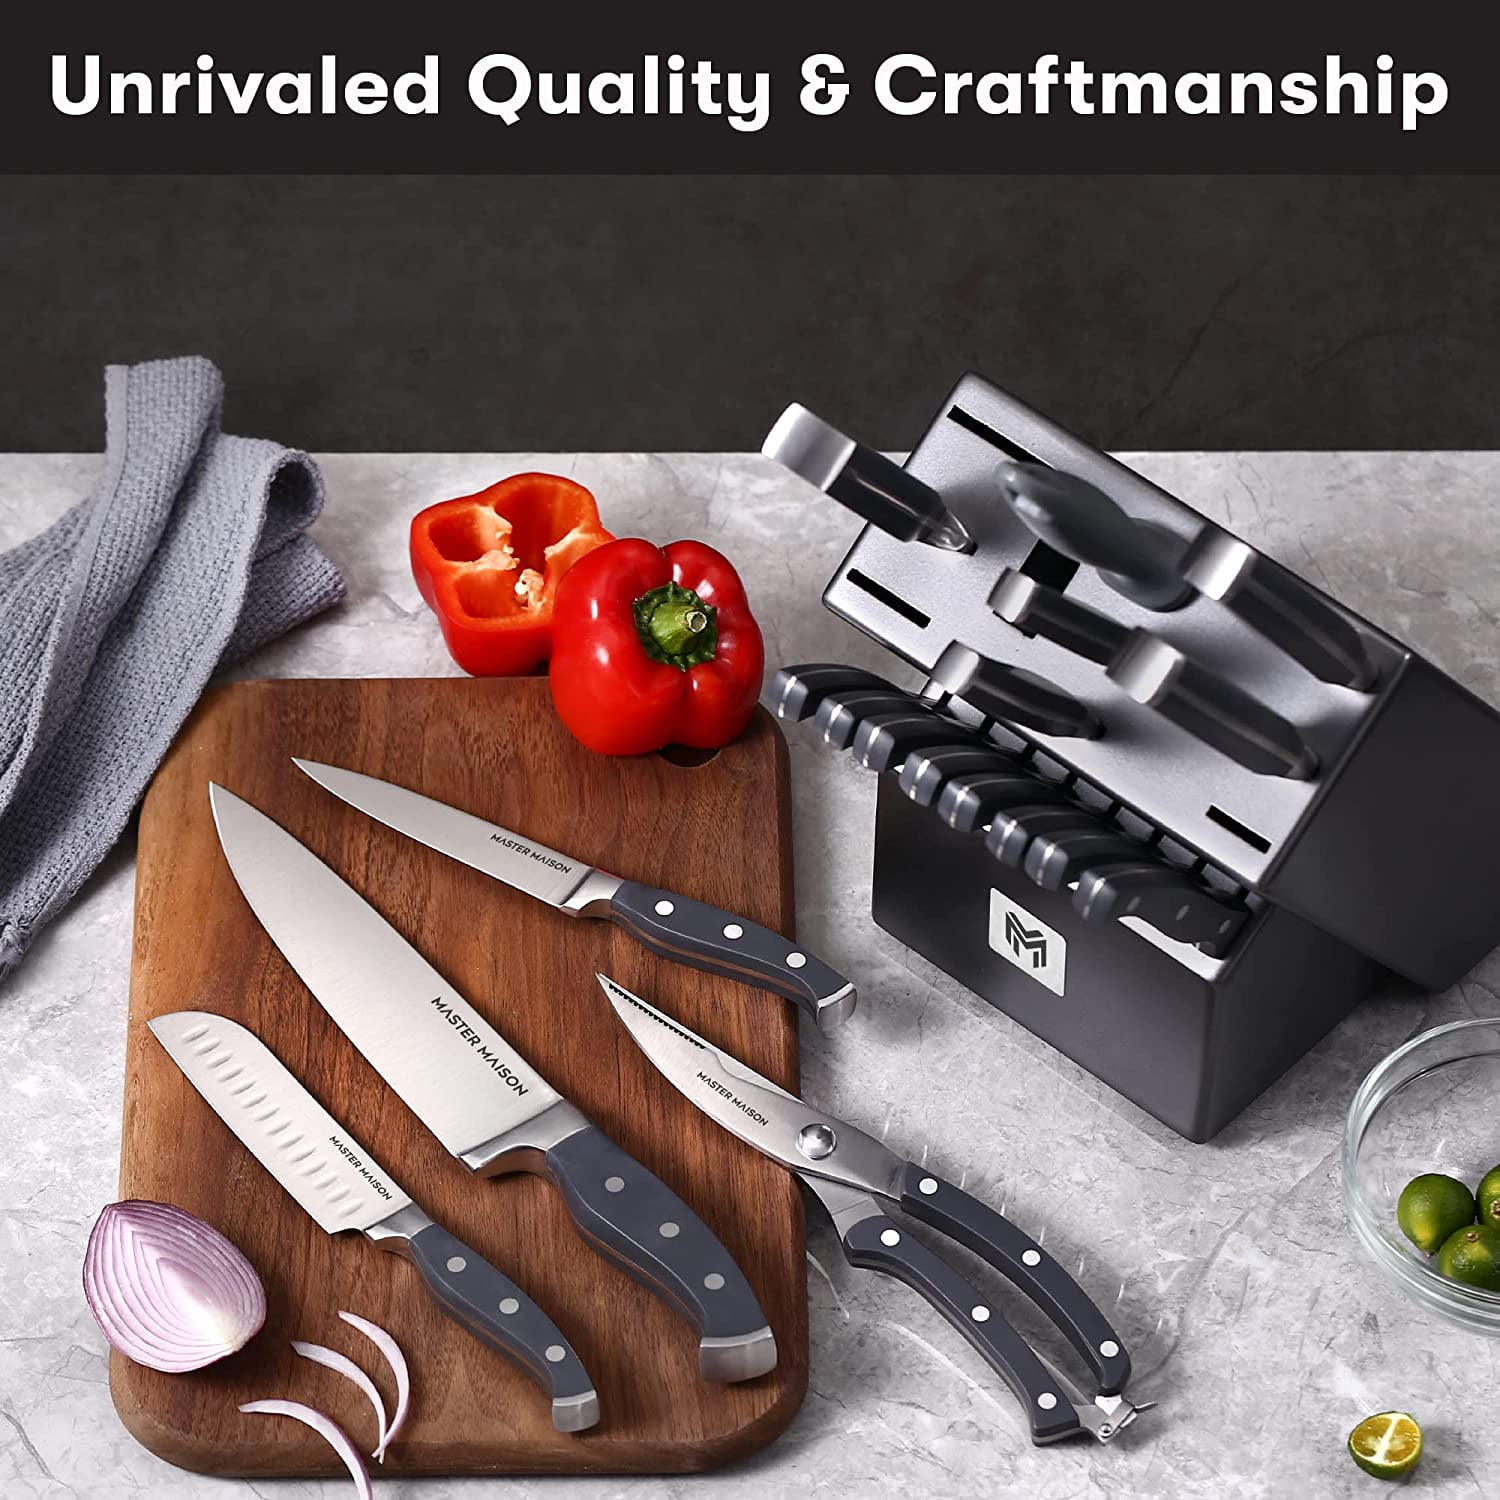  Master Maison Red Kitchen Knife Set With Wood Knife Block &  Bonus Cleaver, German Stainless Steel Knives With Knife Sharpener & 8  Steak Knives